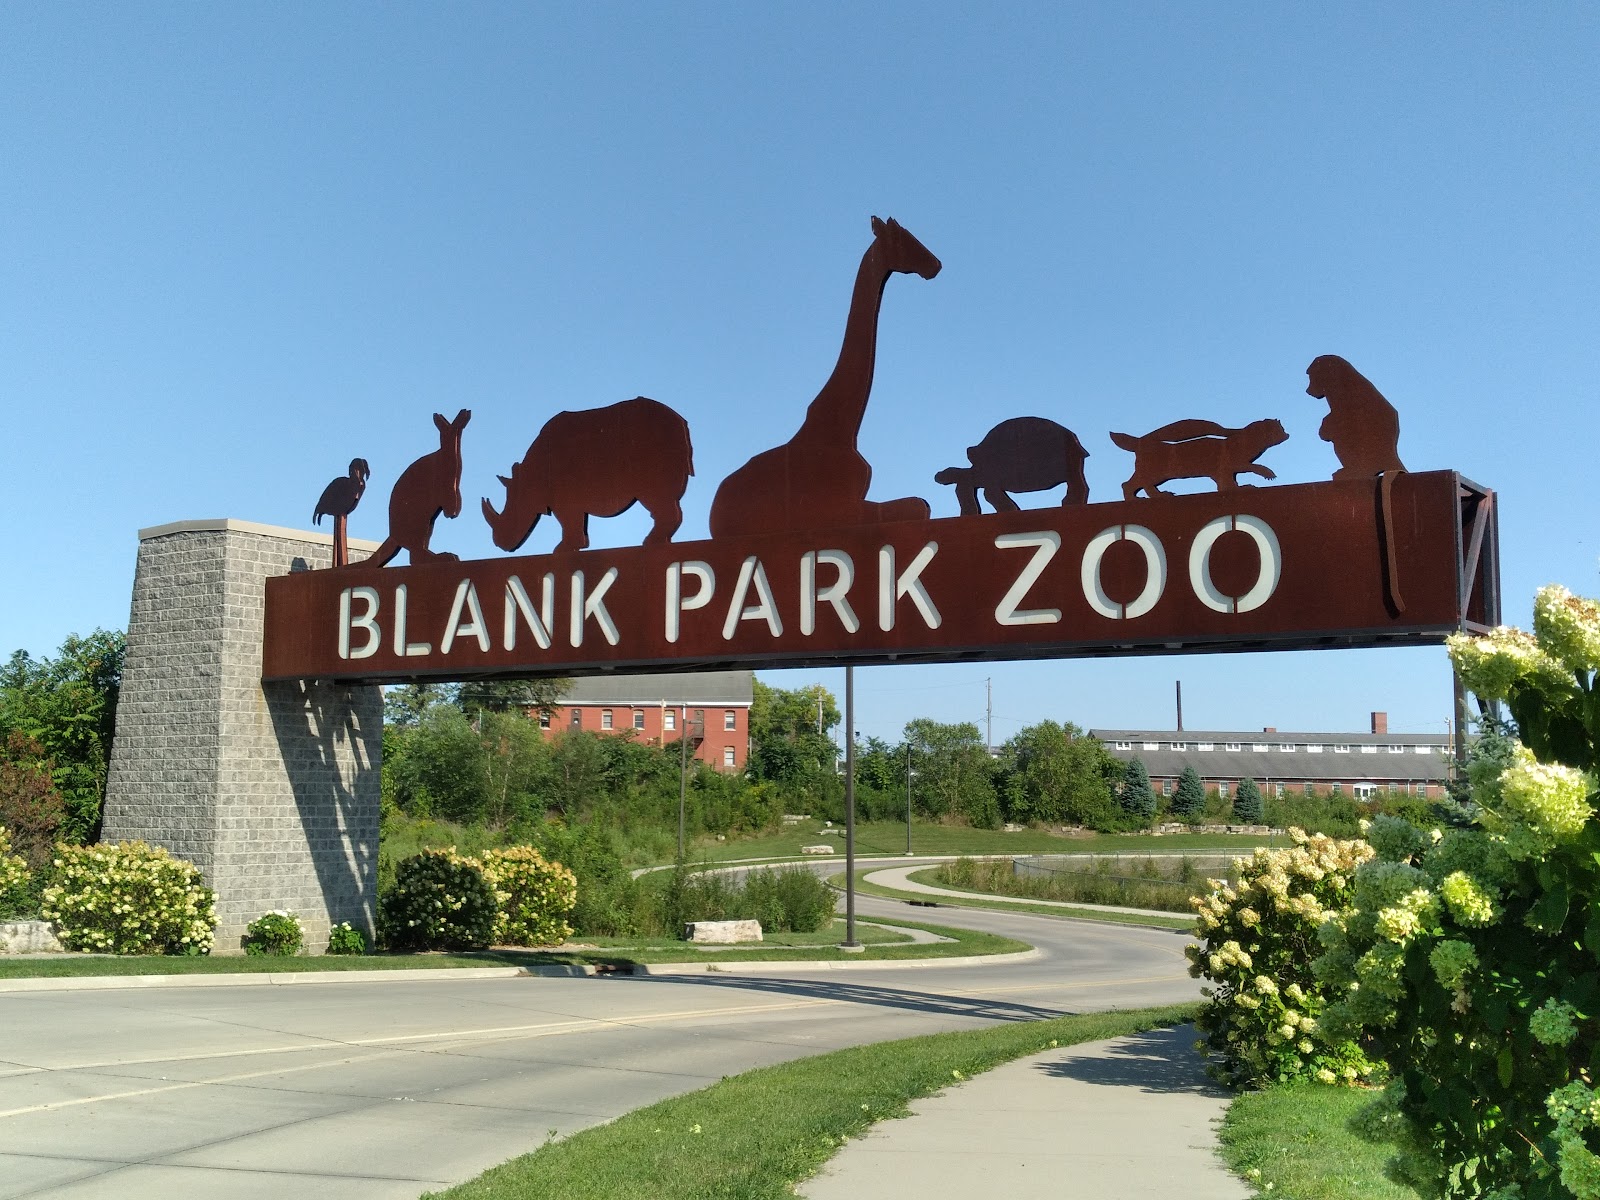 Blank Park Zoo Go Wandering